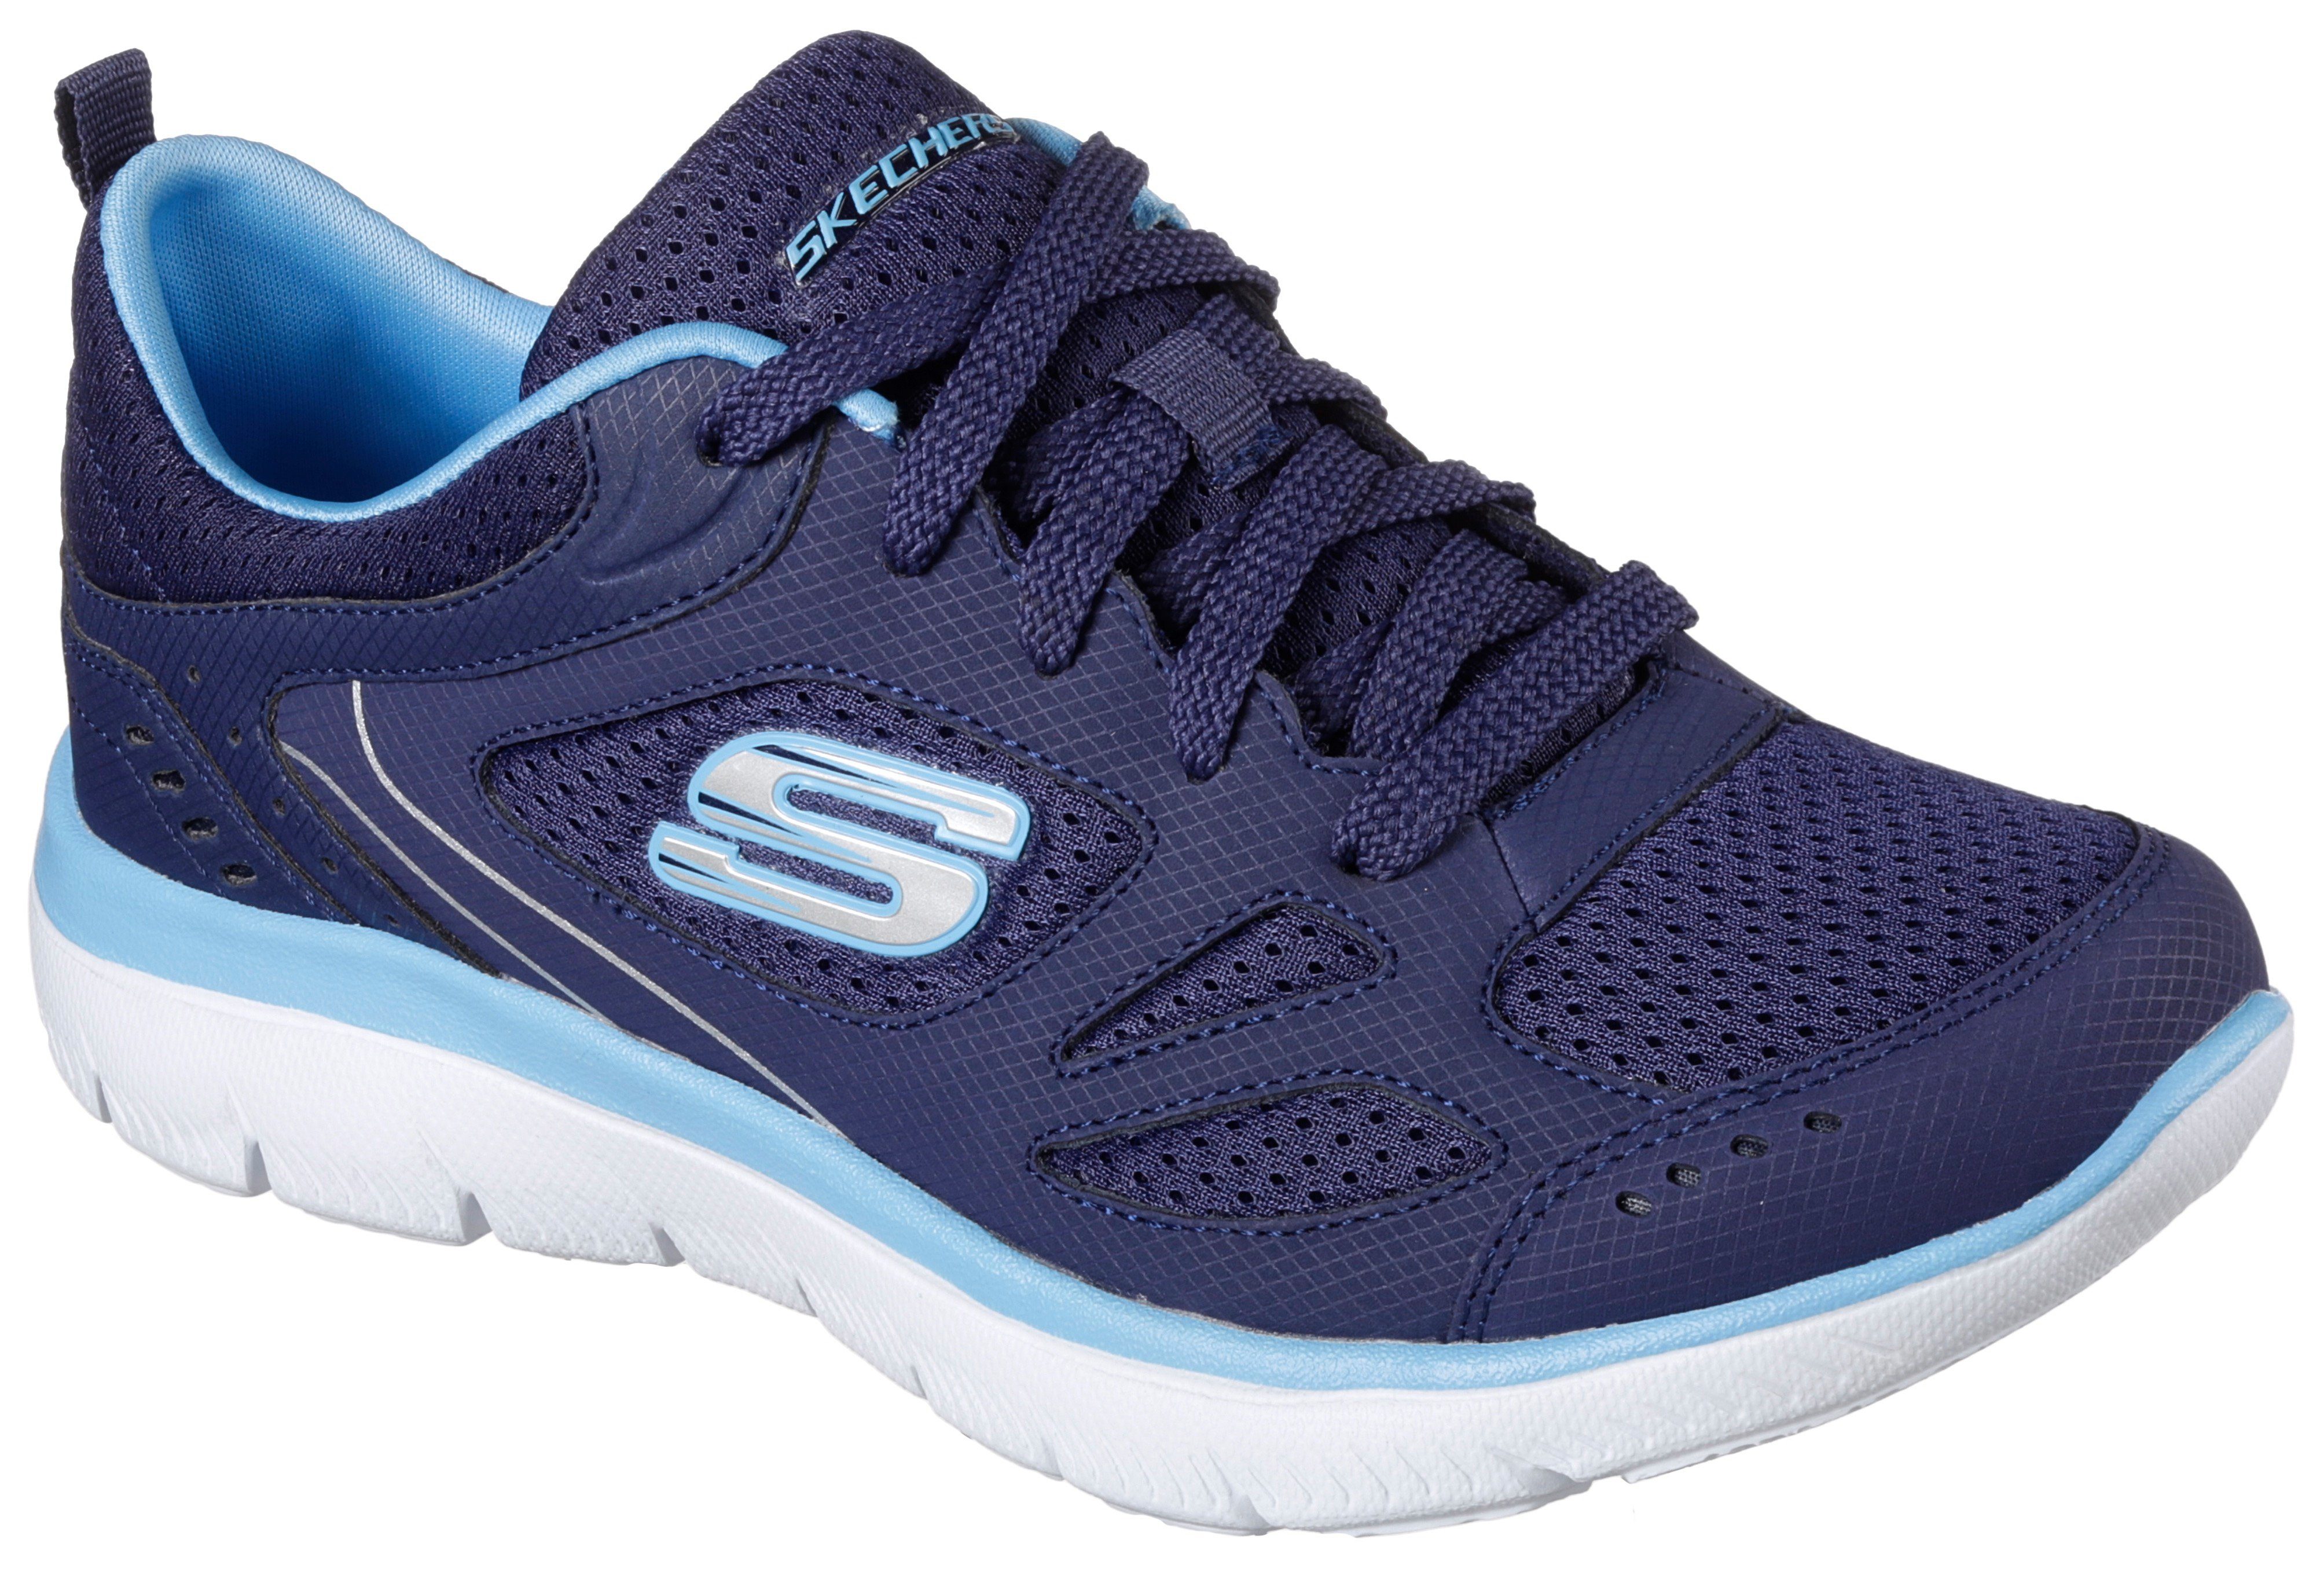 Sneaker navy-blau gepolsterter Skechers SUMMITS-SUITED mit weich Innensohle